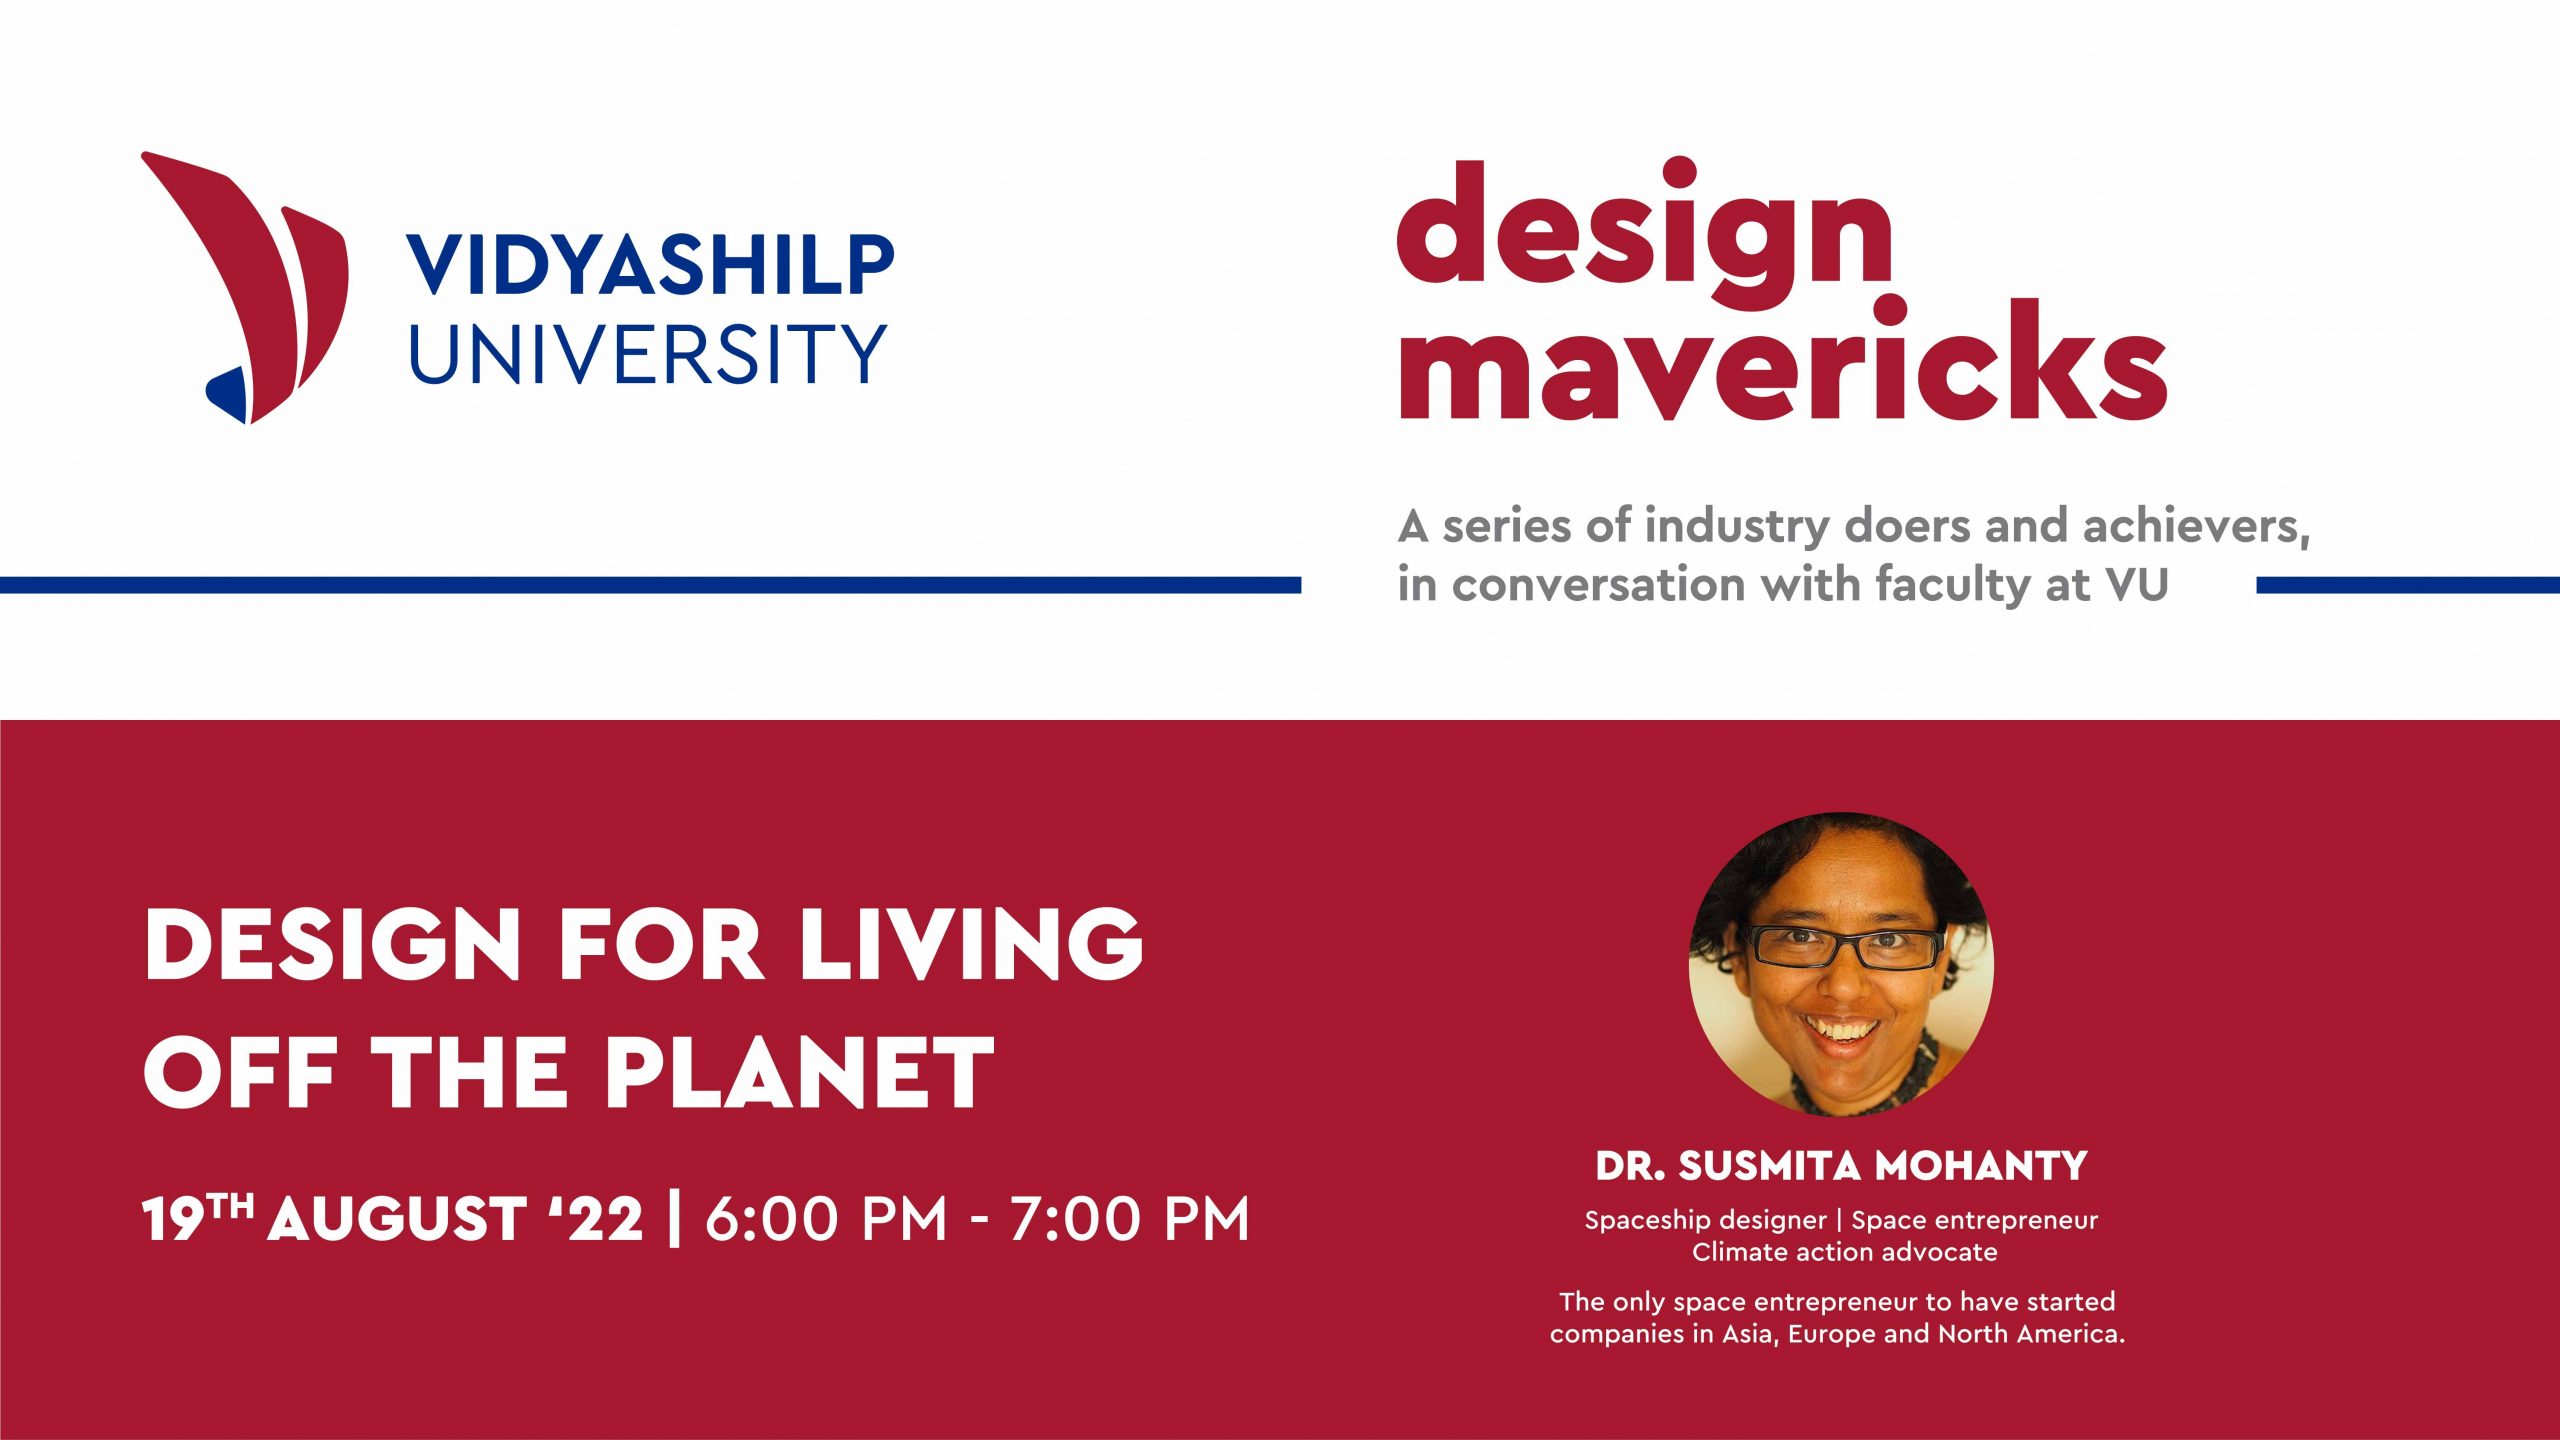 Design for Living off the Planet: Vidyashilp University